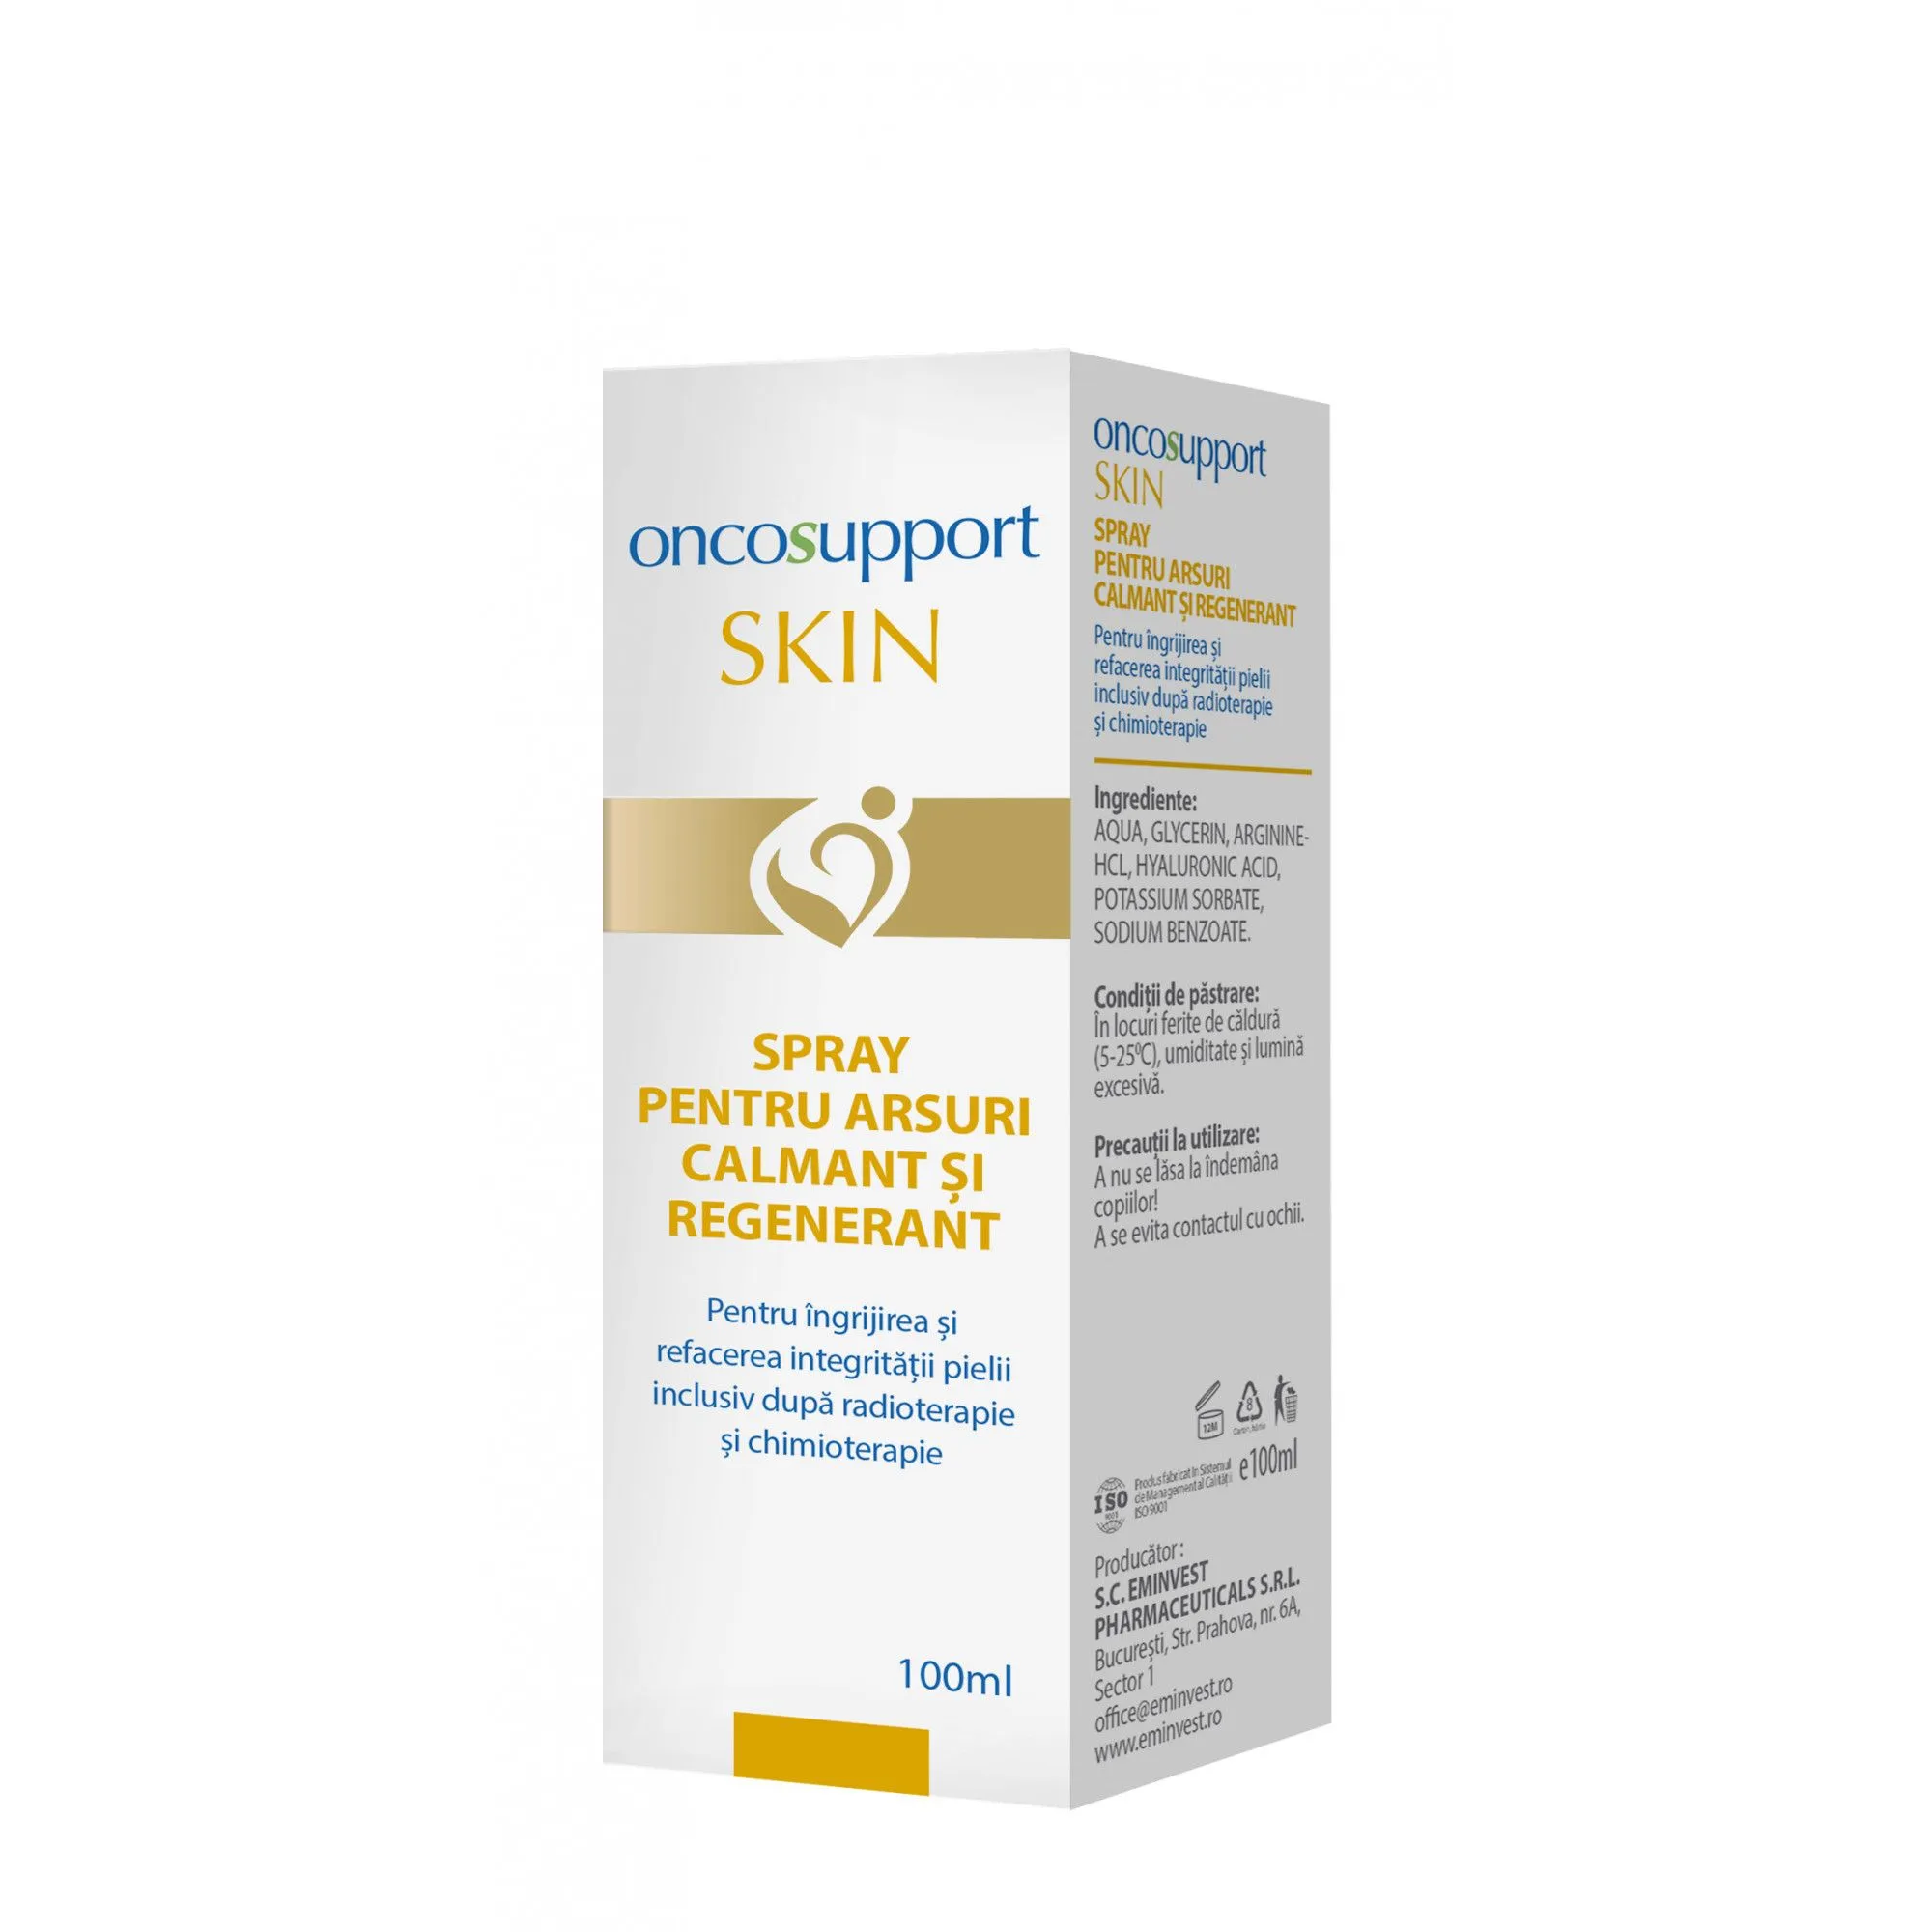 Oncosupport Skin Spray pentru arsuri calmant si regenerant, 100 ml, Eminvest